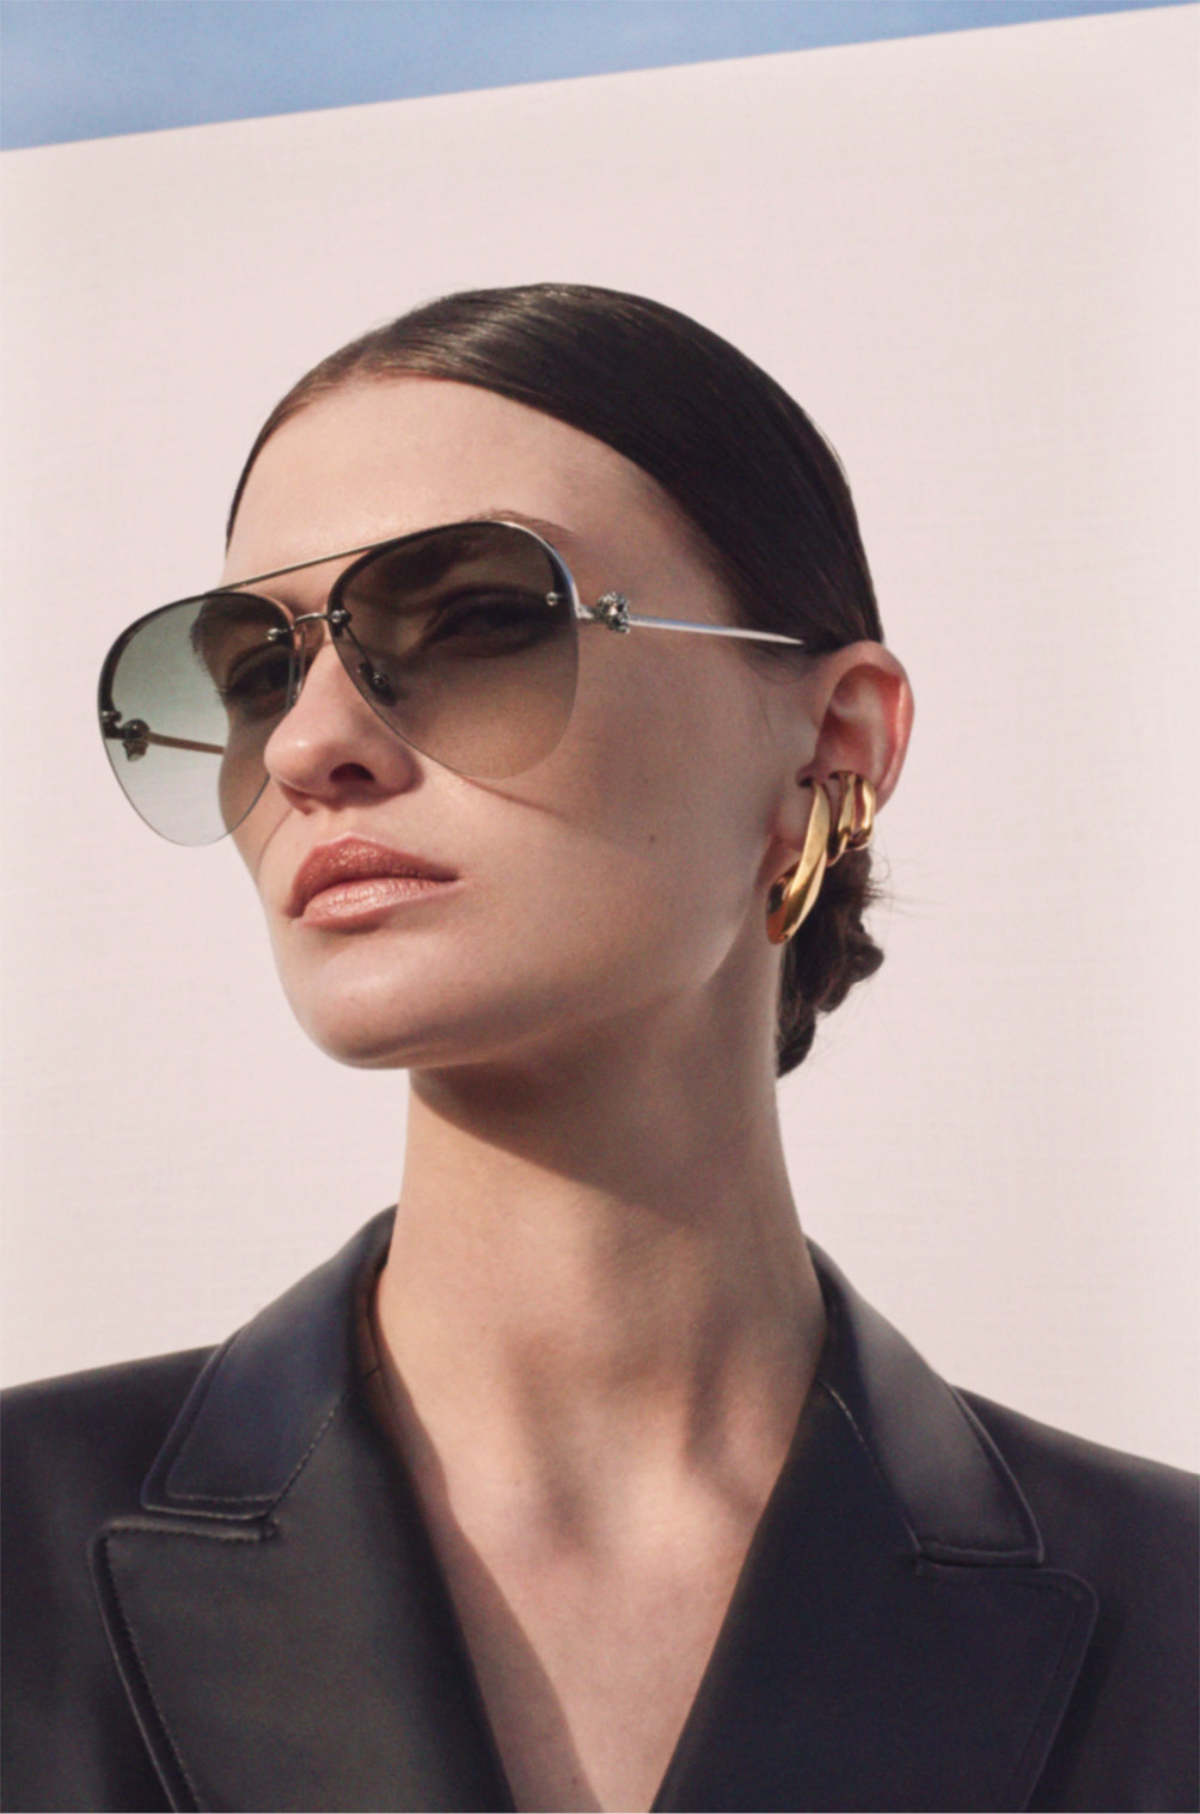 Alexander McQueen: The Skull Jewelled Sunglasses